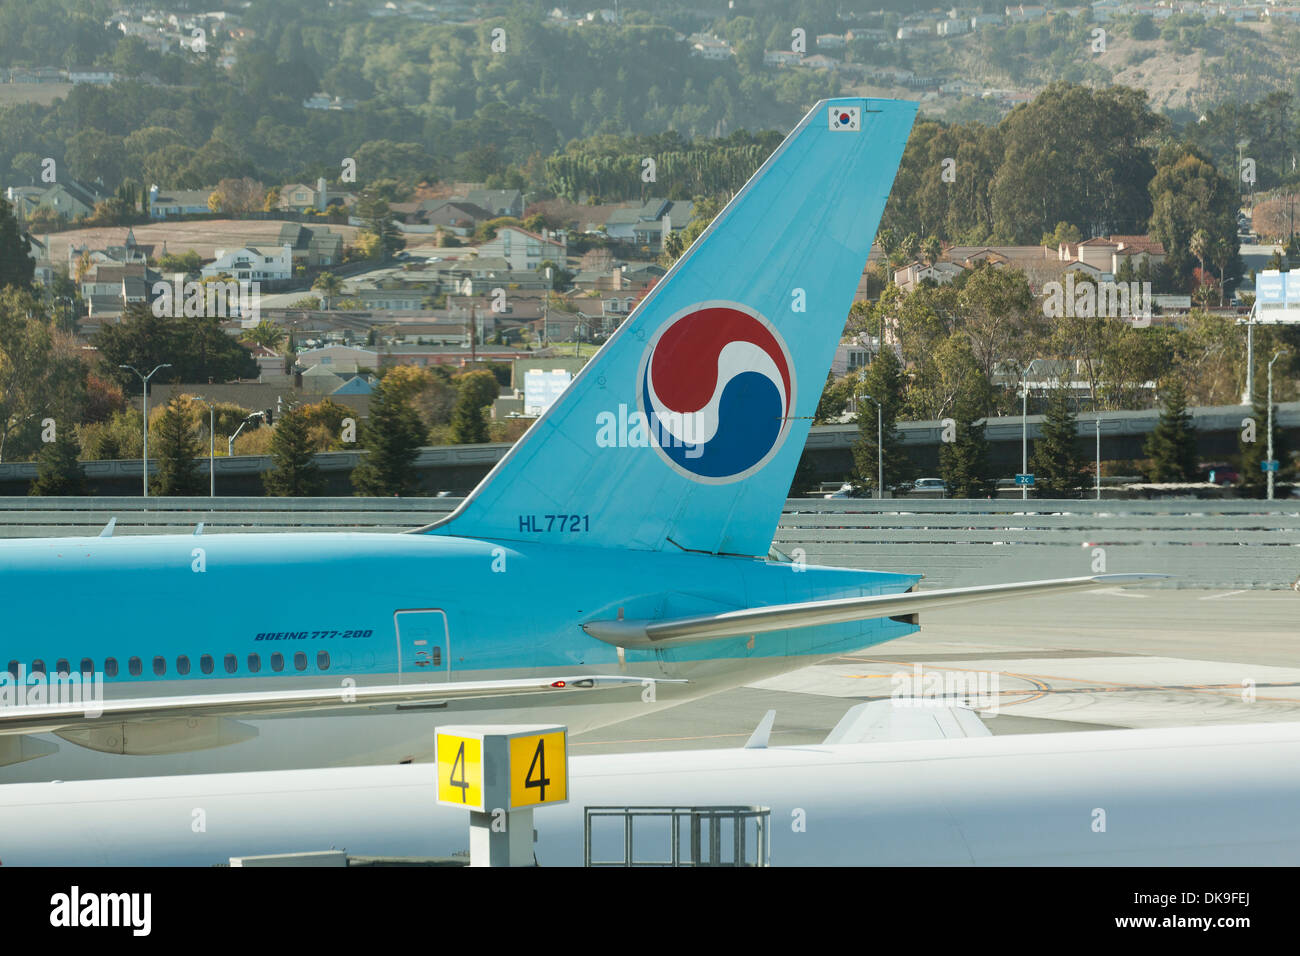 Korean Air Boeing 777-200 plane - San Francisco International Airport - California USA Stock Photo